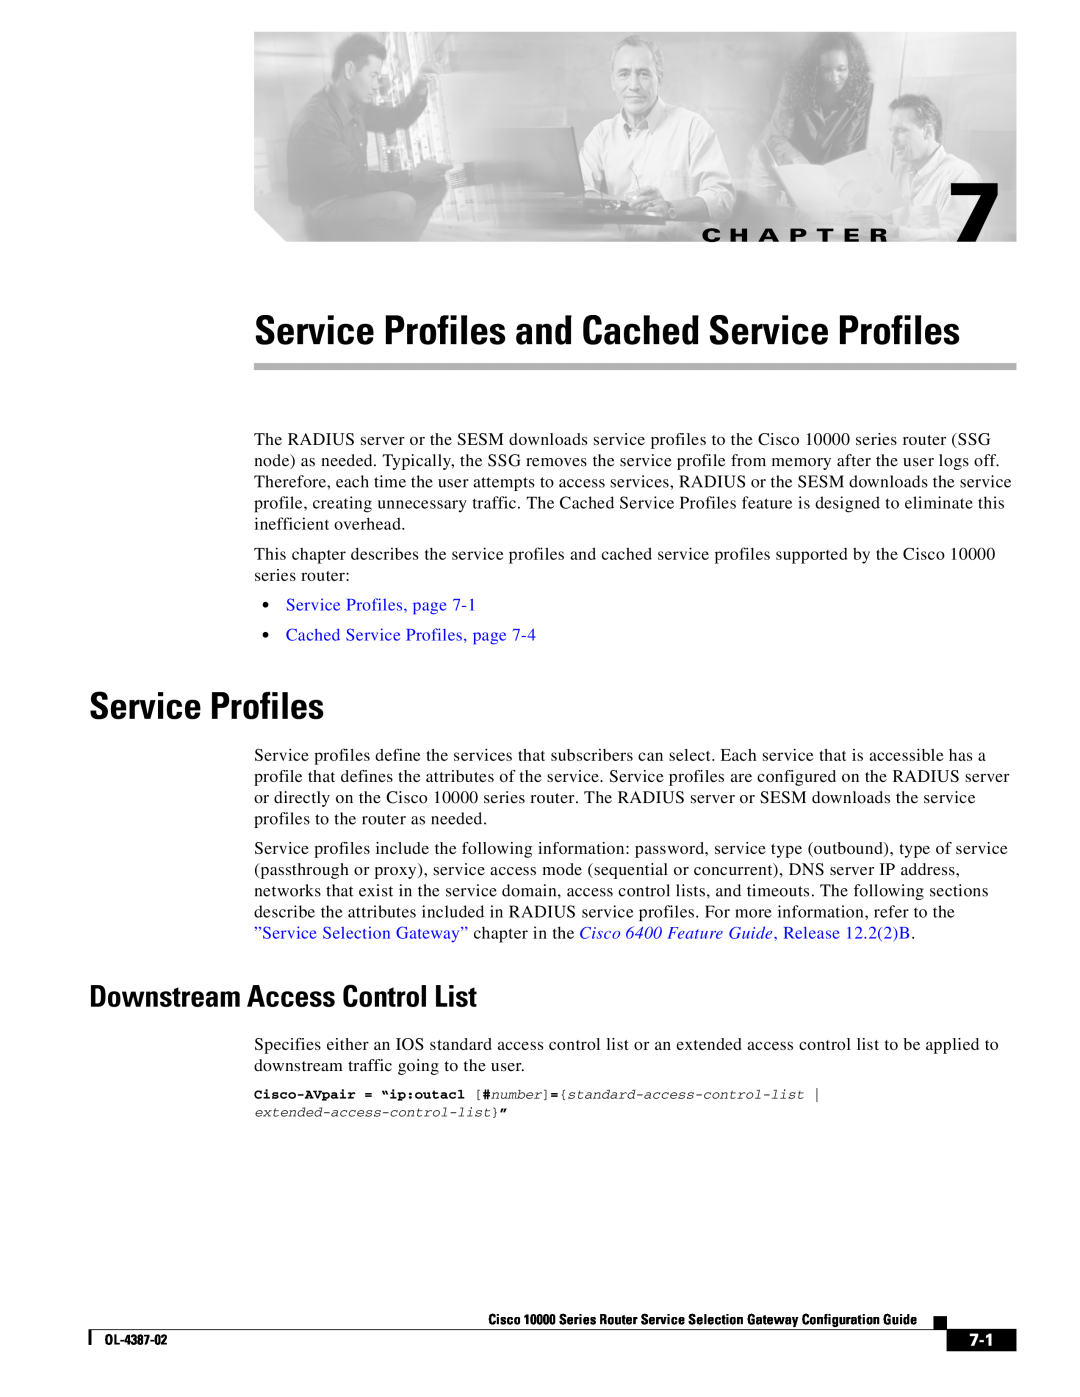 Cisco Systems OL-4387-02 Downstream Access Control List, Service Profiles and Cached Service Profiles, C H A P T E R 